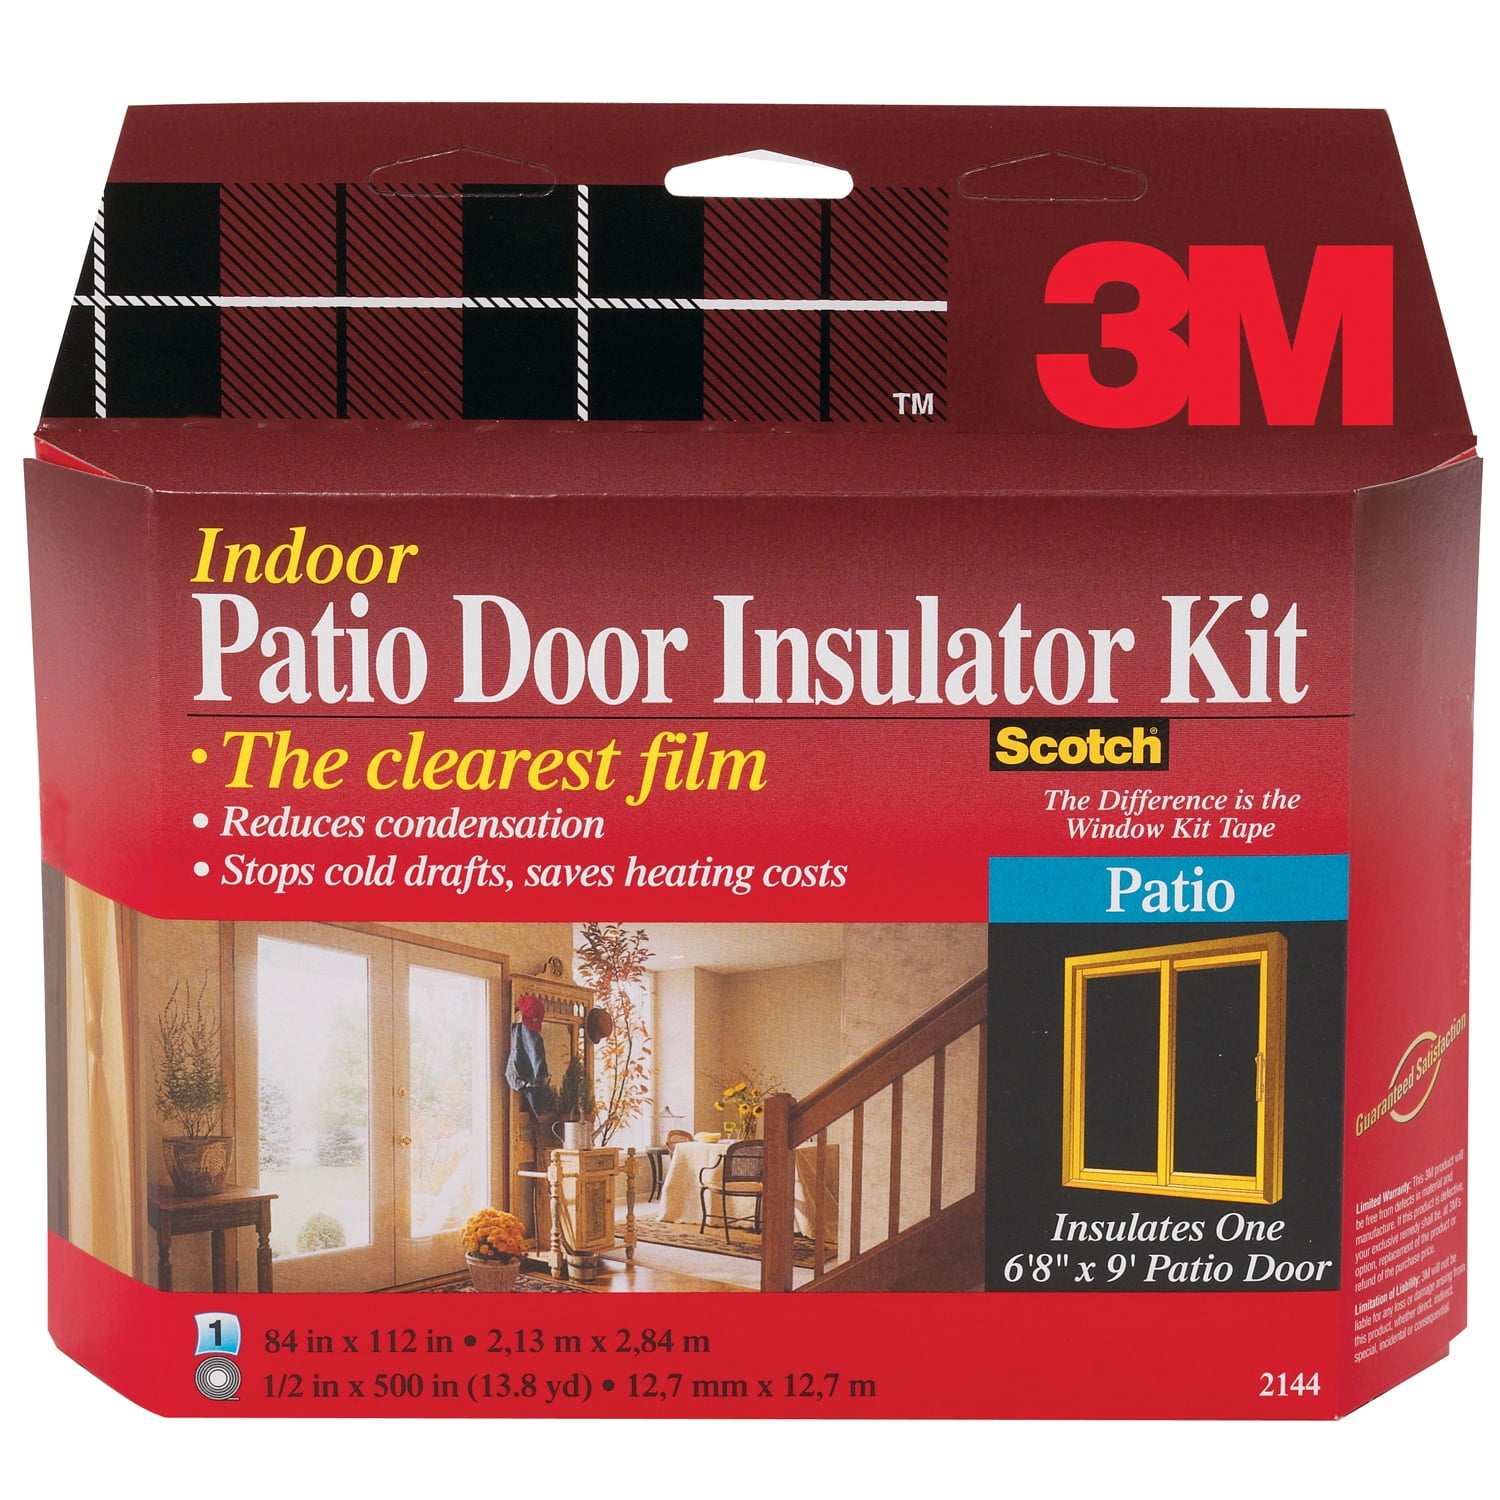 Details about   3M Window Insulator Kit Scotch Patio Door & XL Window 